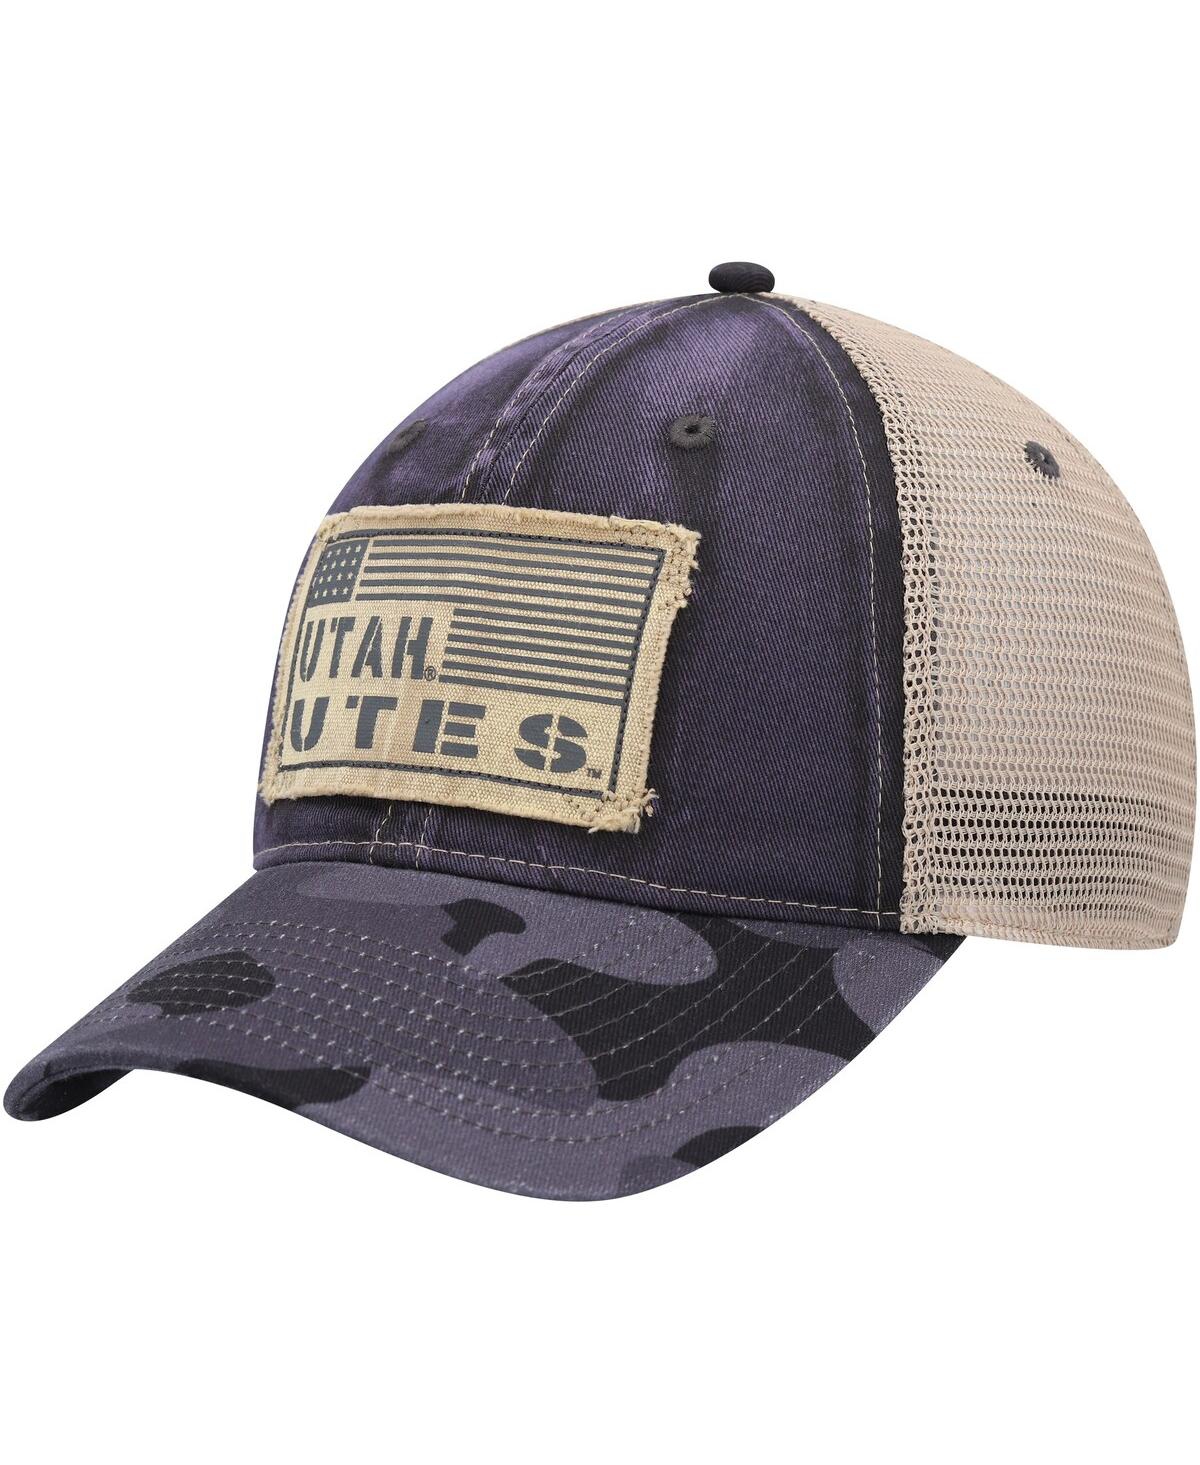 Men's Colosseum Charcoal Utah Utes Oht Military-Inspired Appreciation United Trucker Snapback Hat - Charcoal